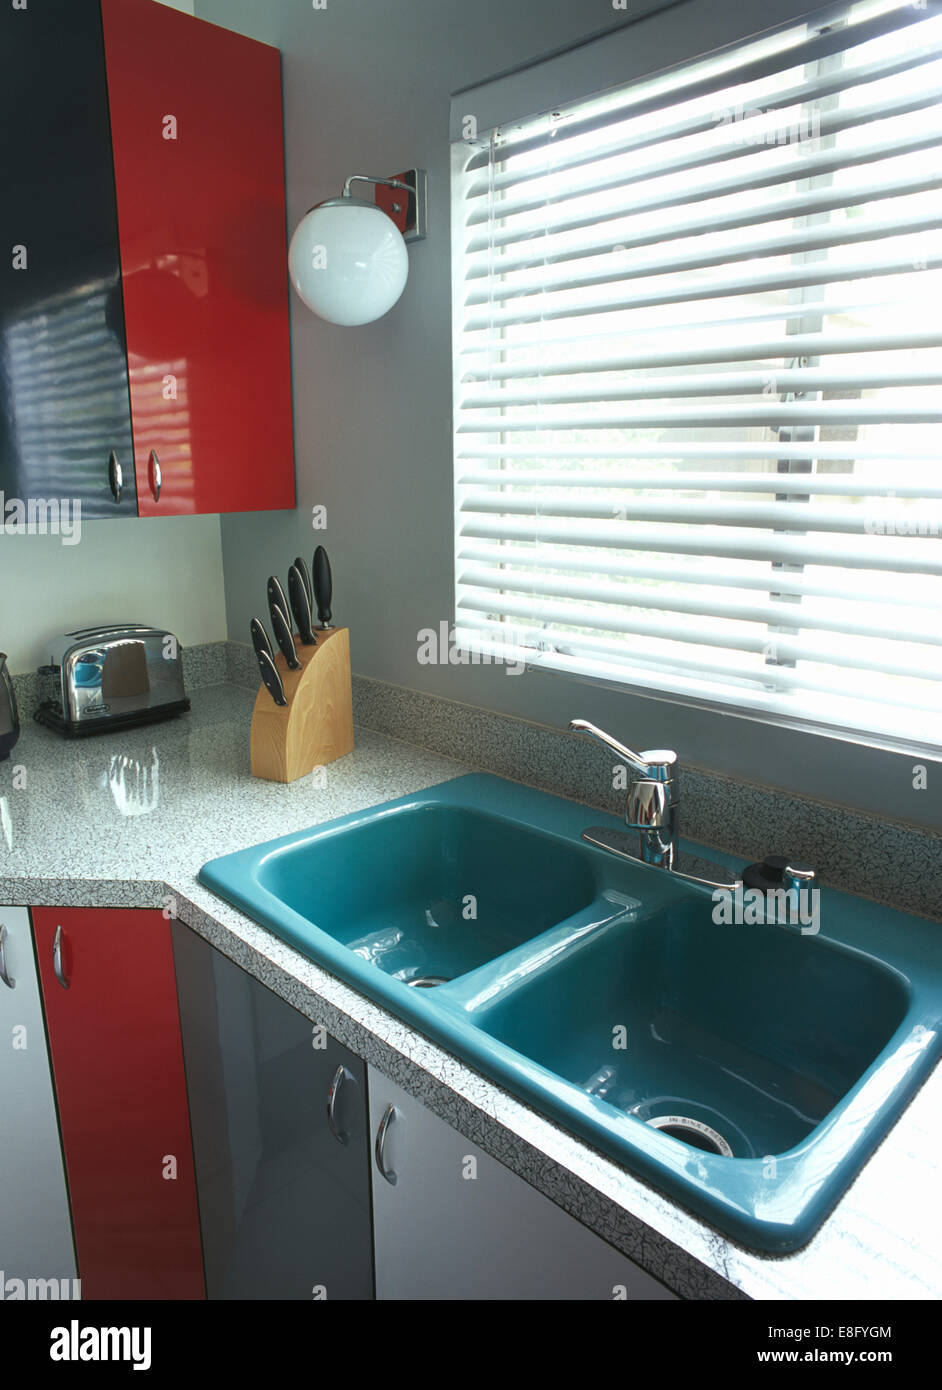 Venetian blind above blue double sinks in modern kitchen Stock Photo